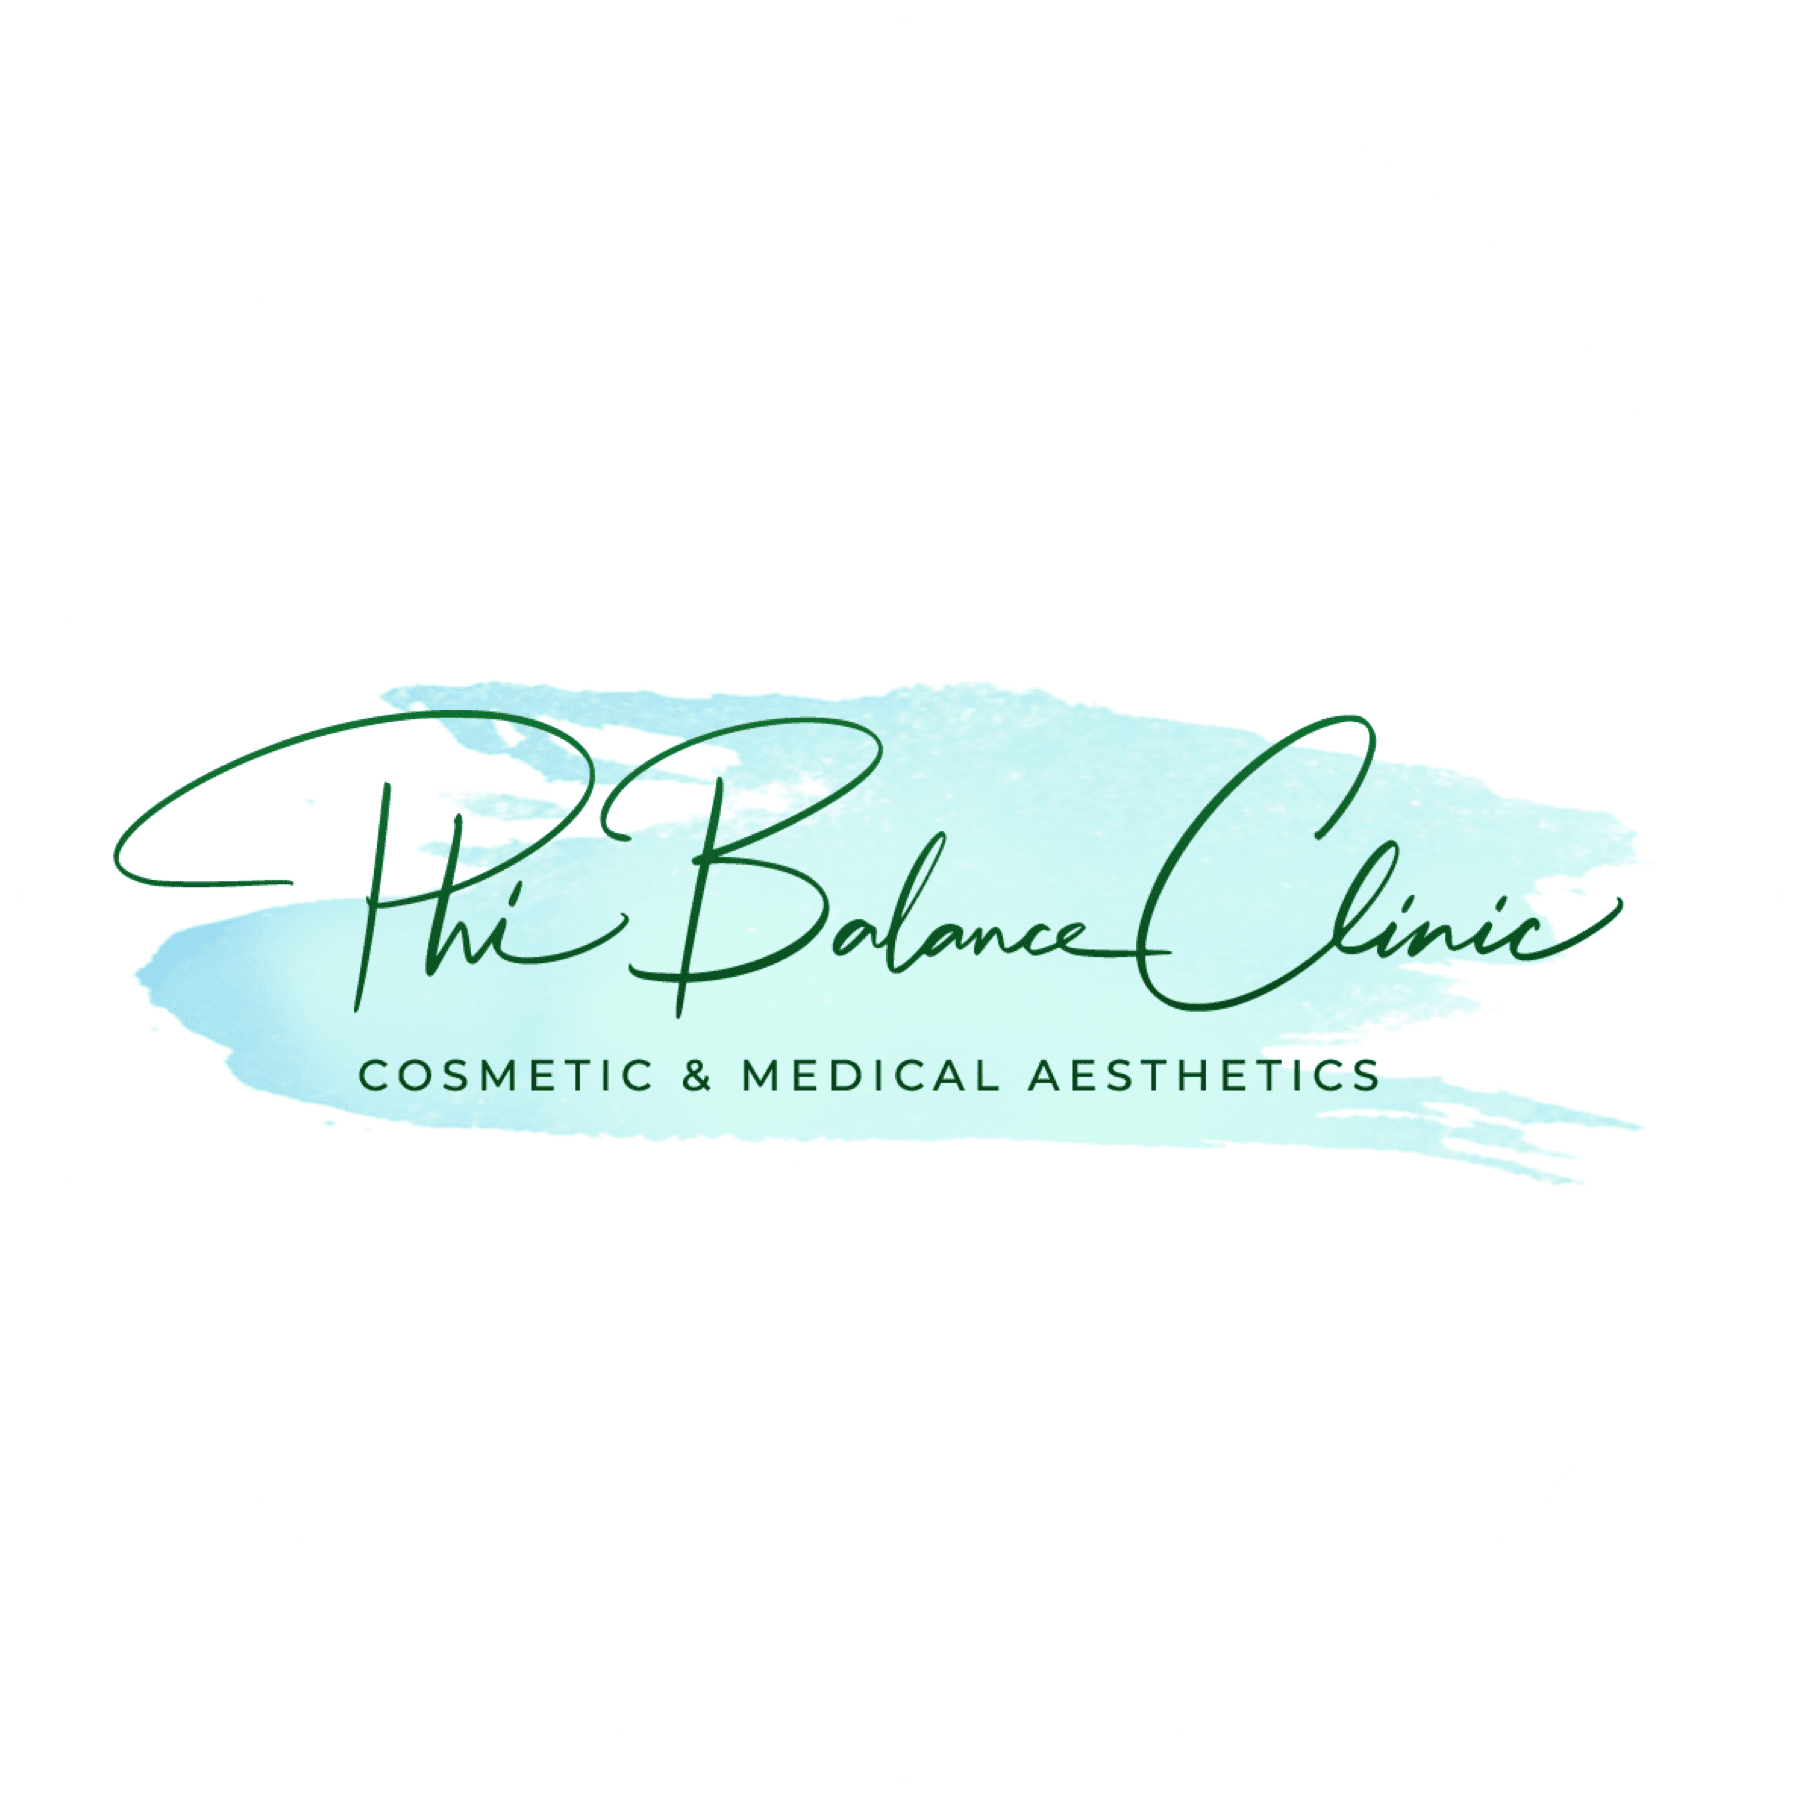 Phi Balance Clinic